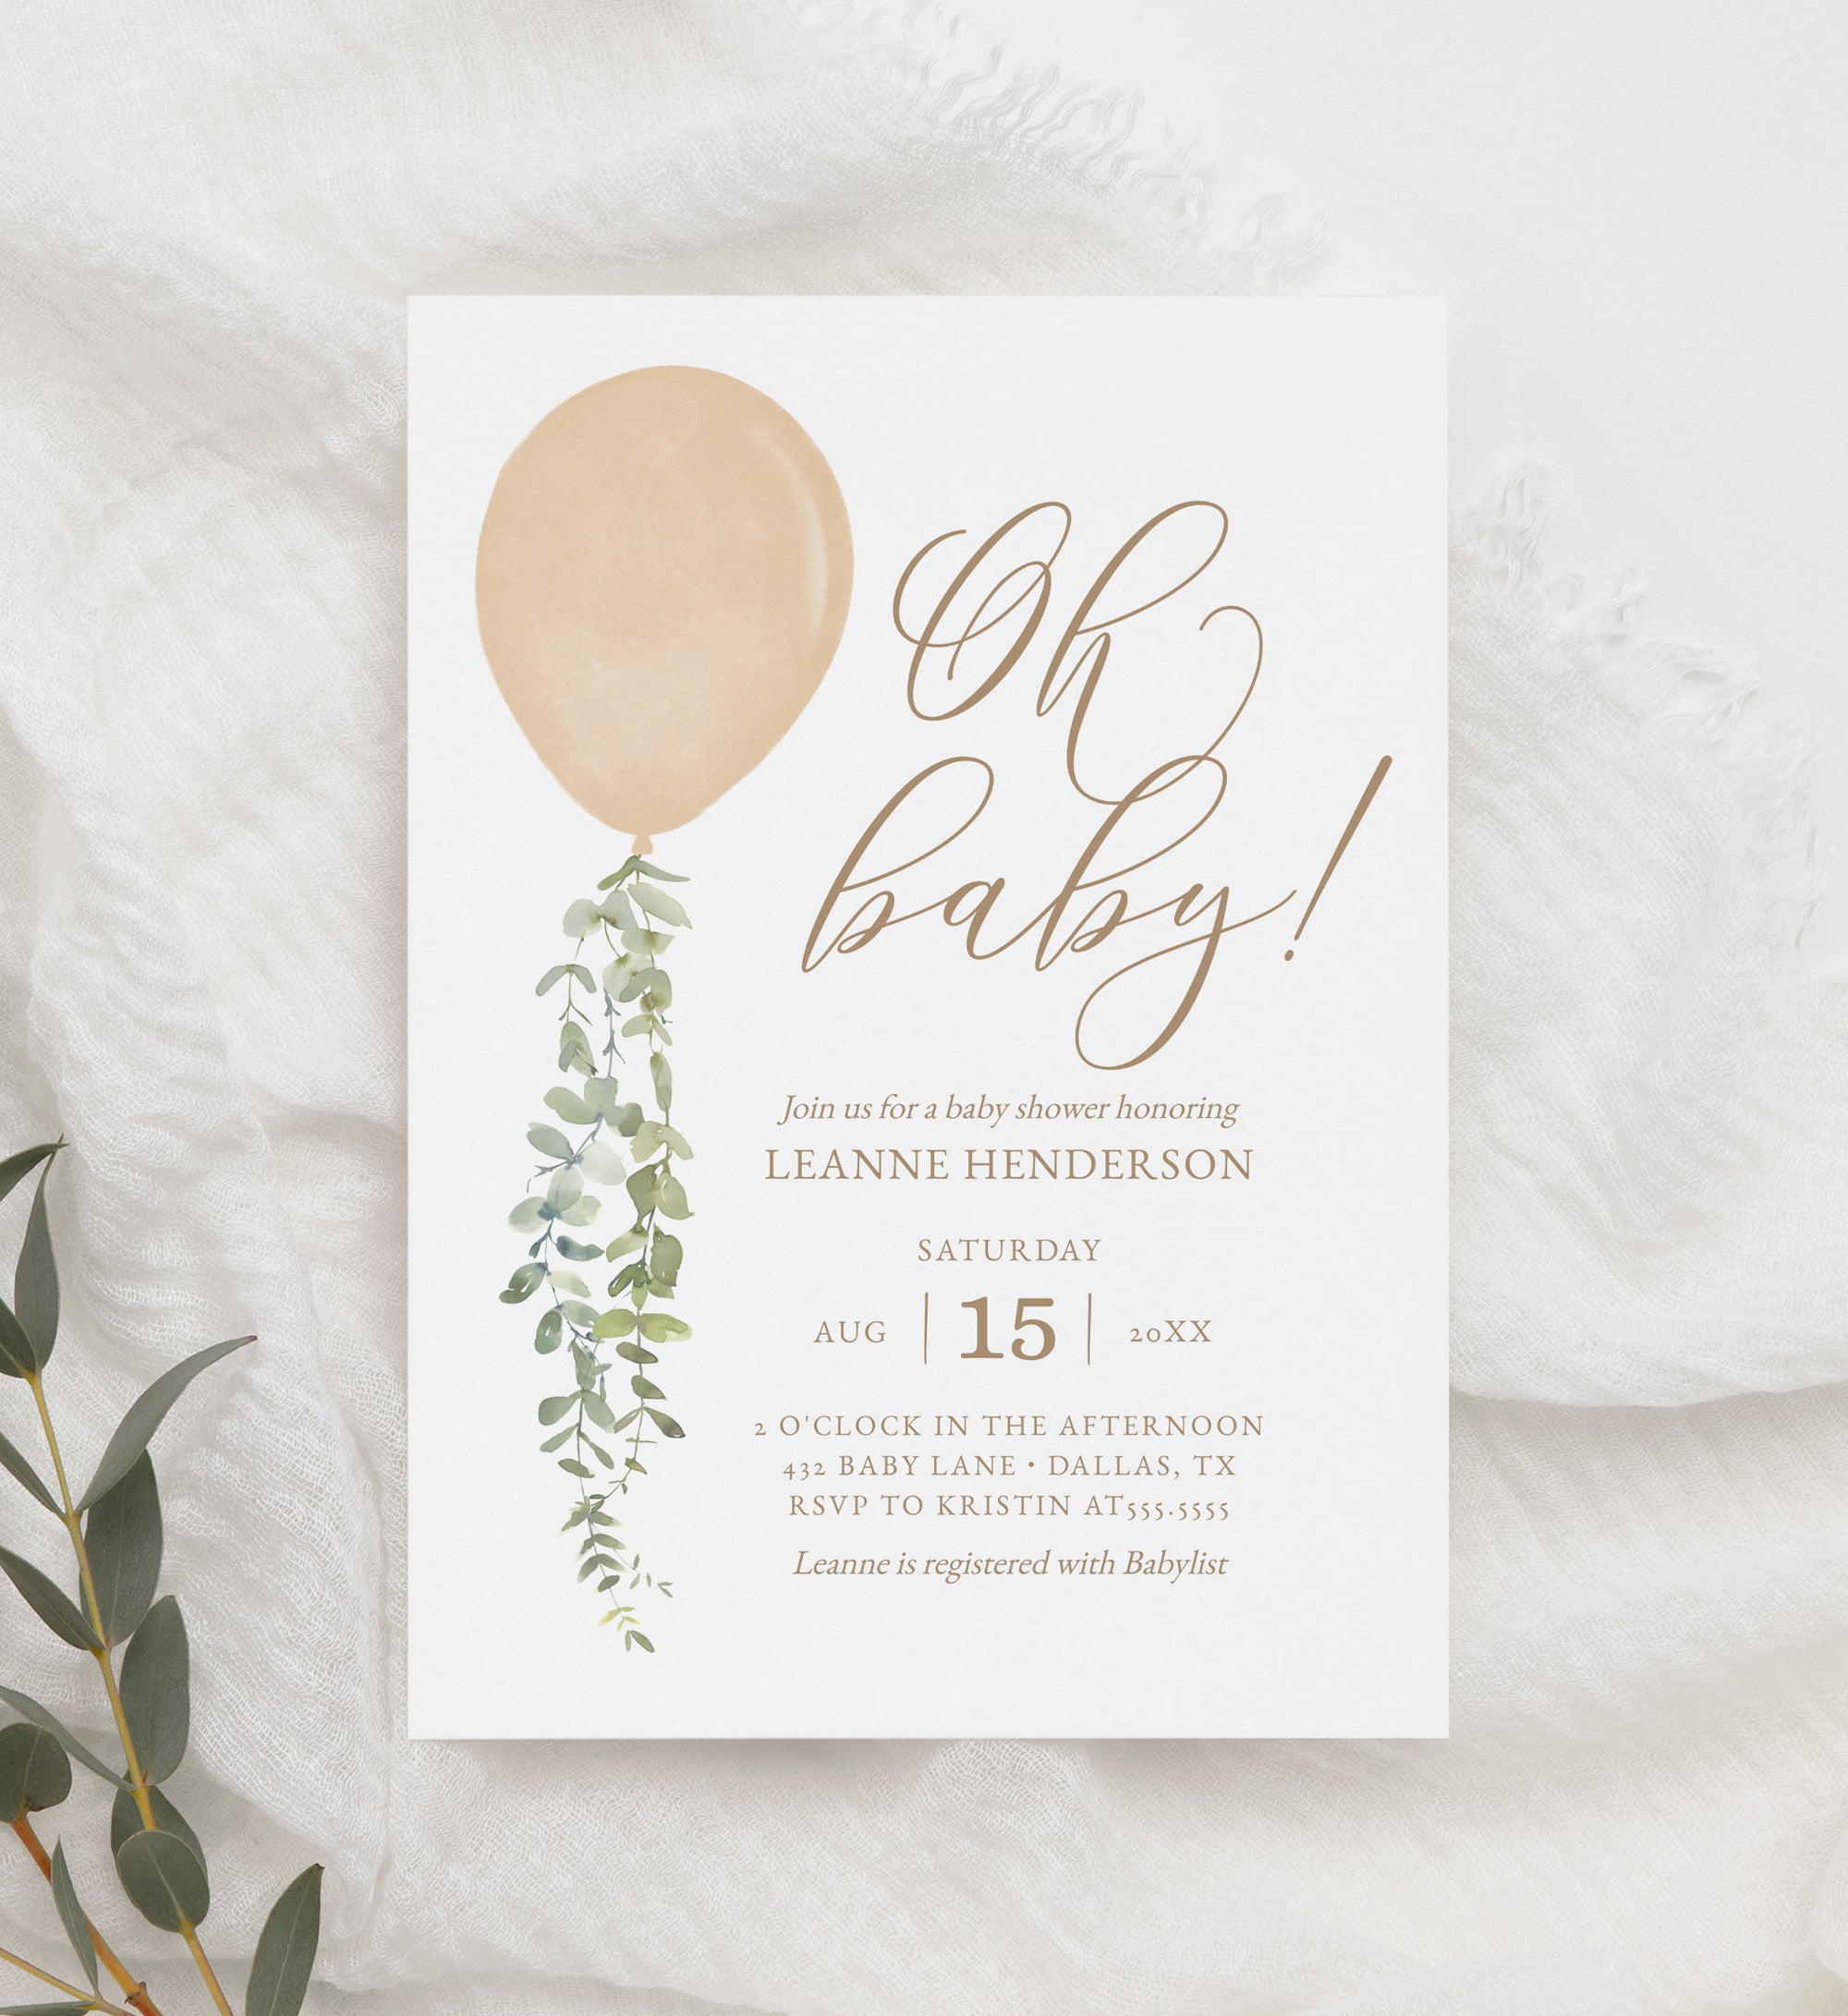 Editable Gold Balloon Baby Shower Invitation Template